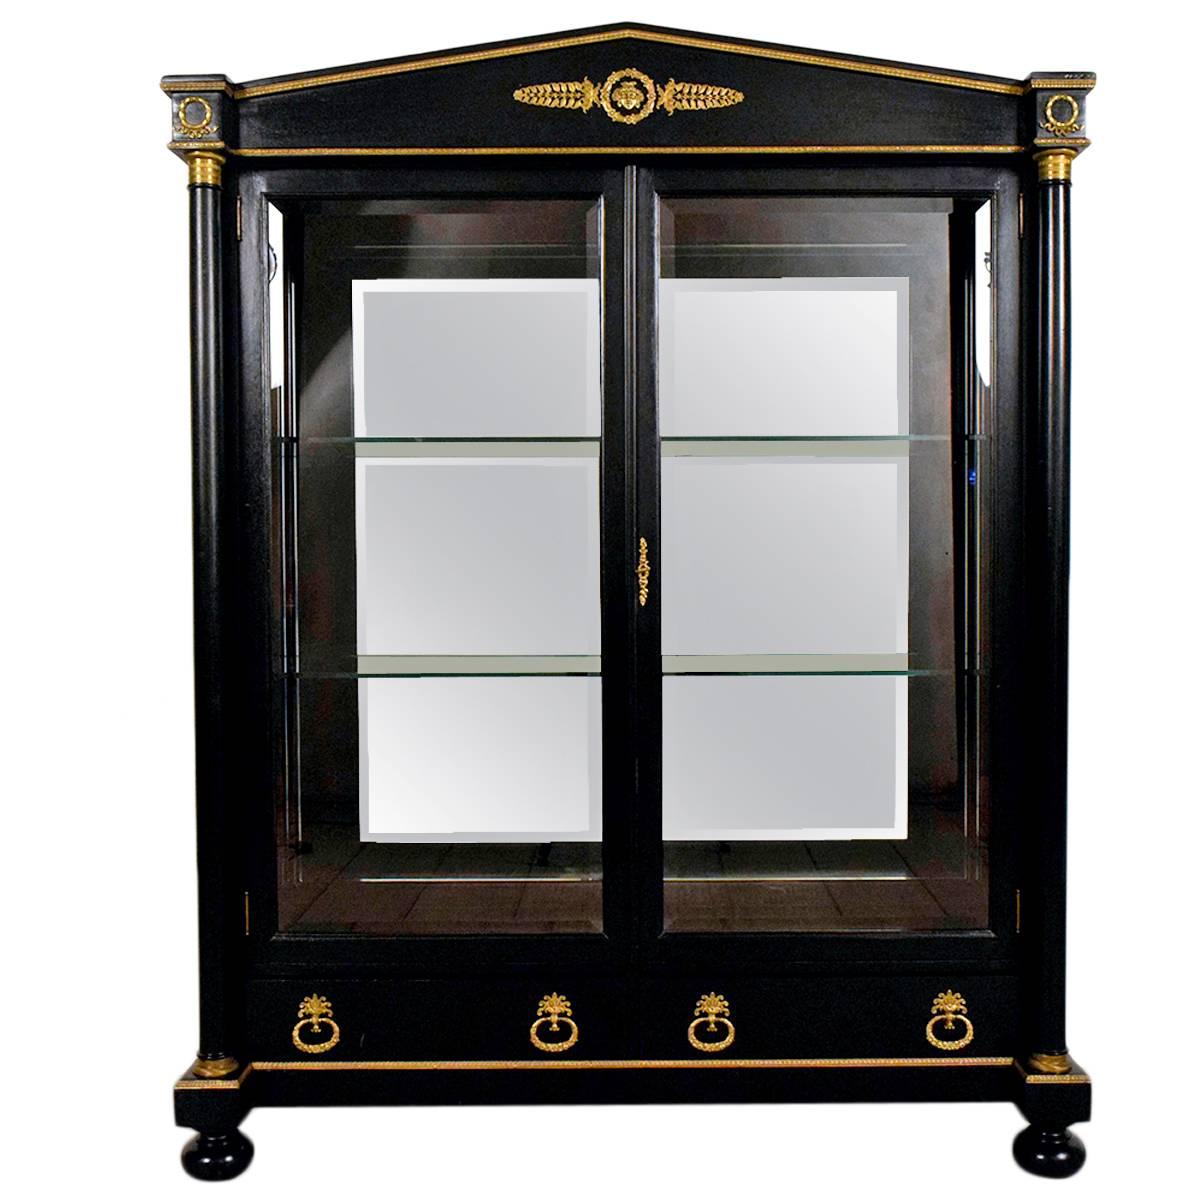 19th Century French Empire-style Ebonized Display Cabinet